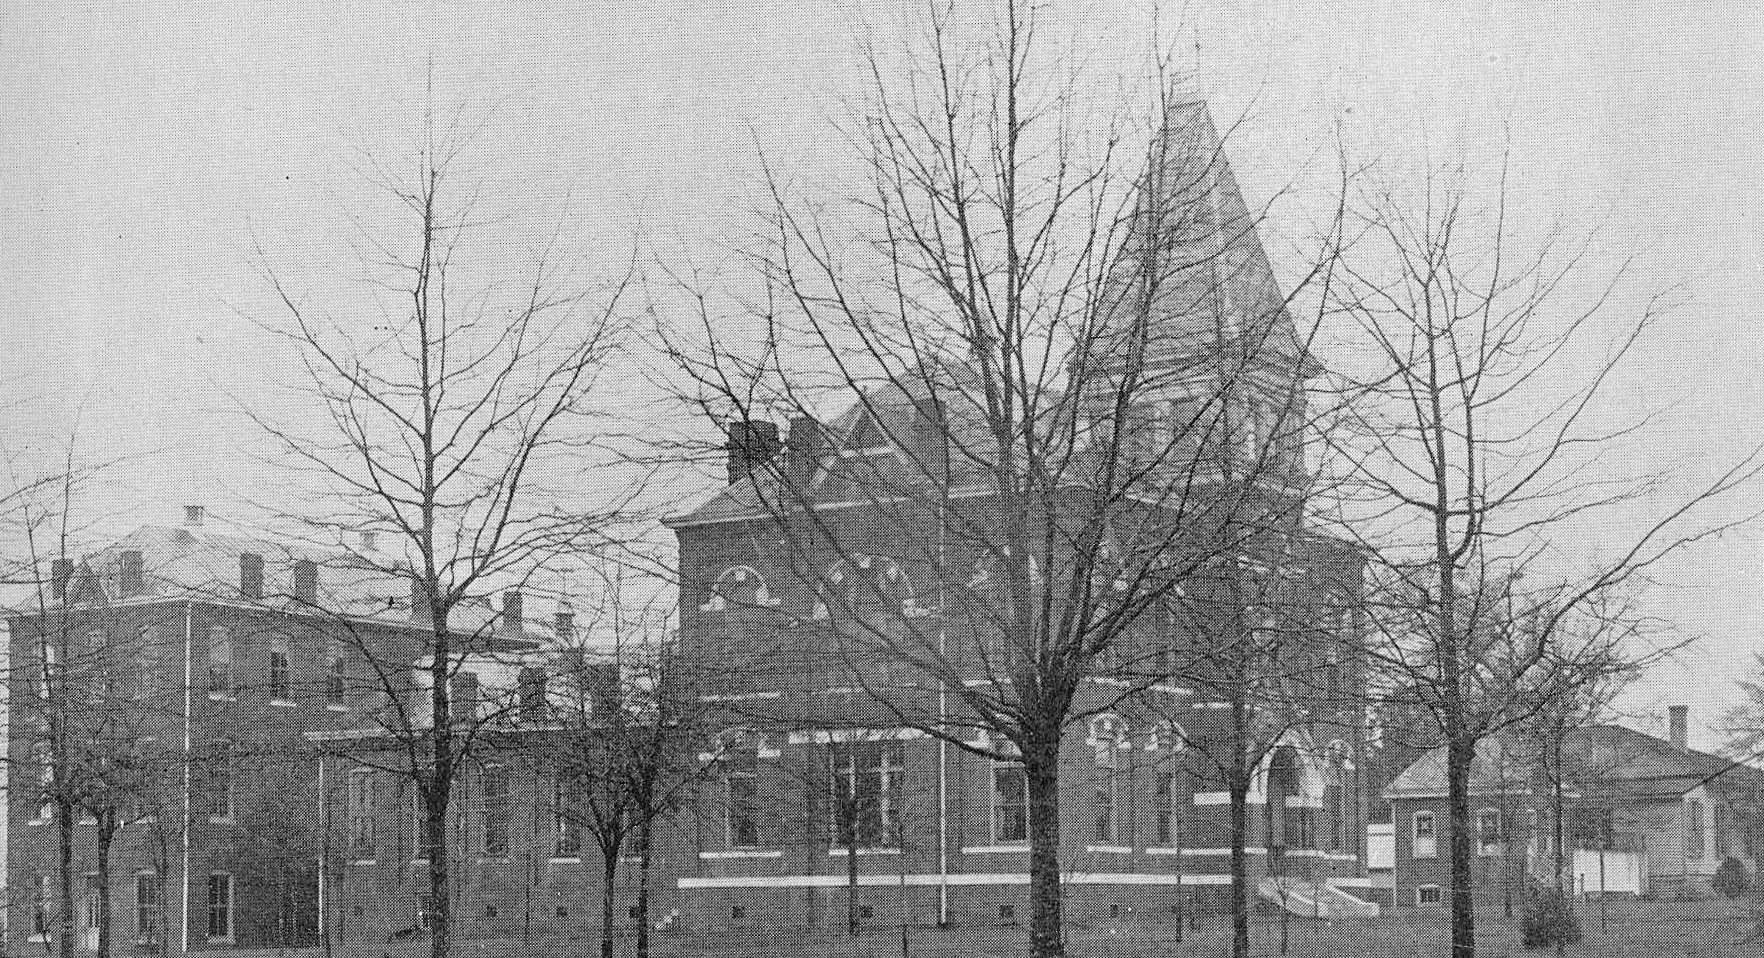 Old, historical photograph of Auburn University